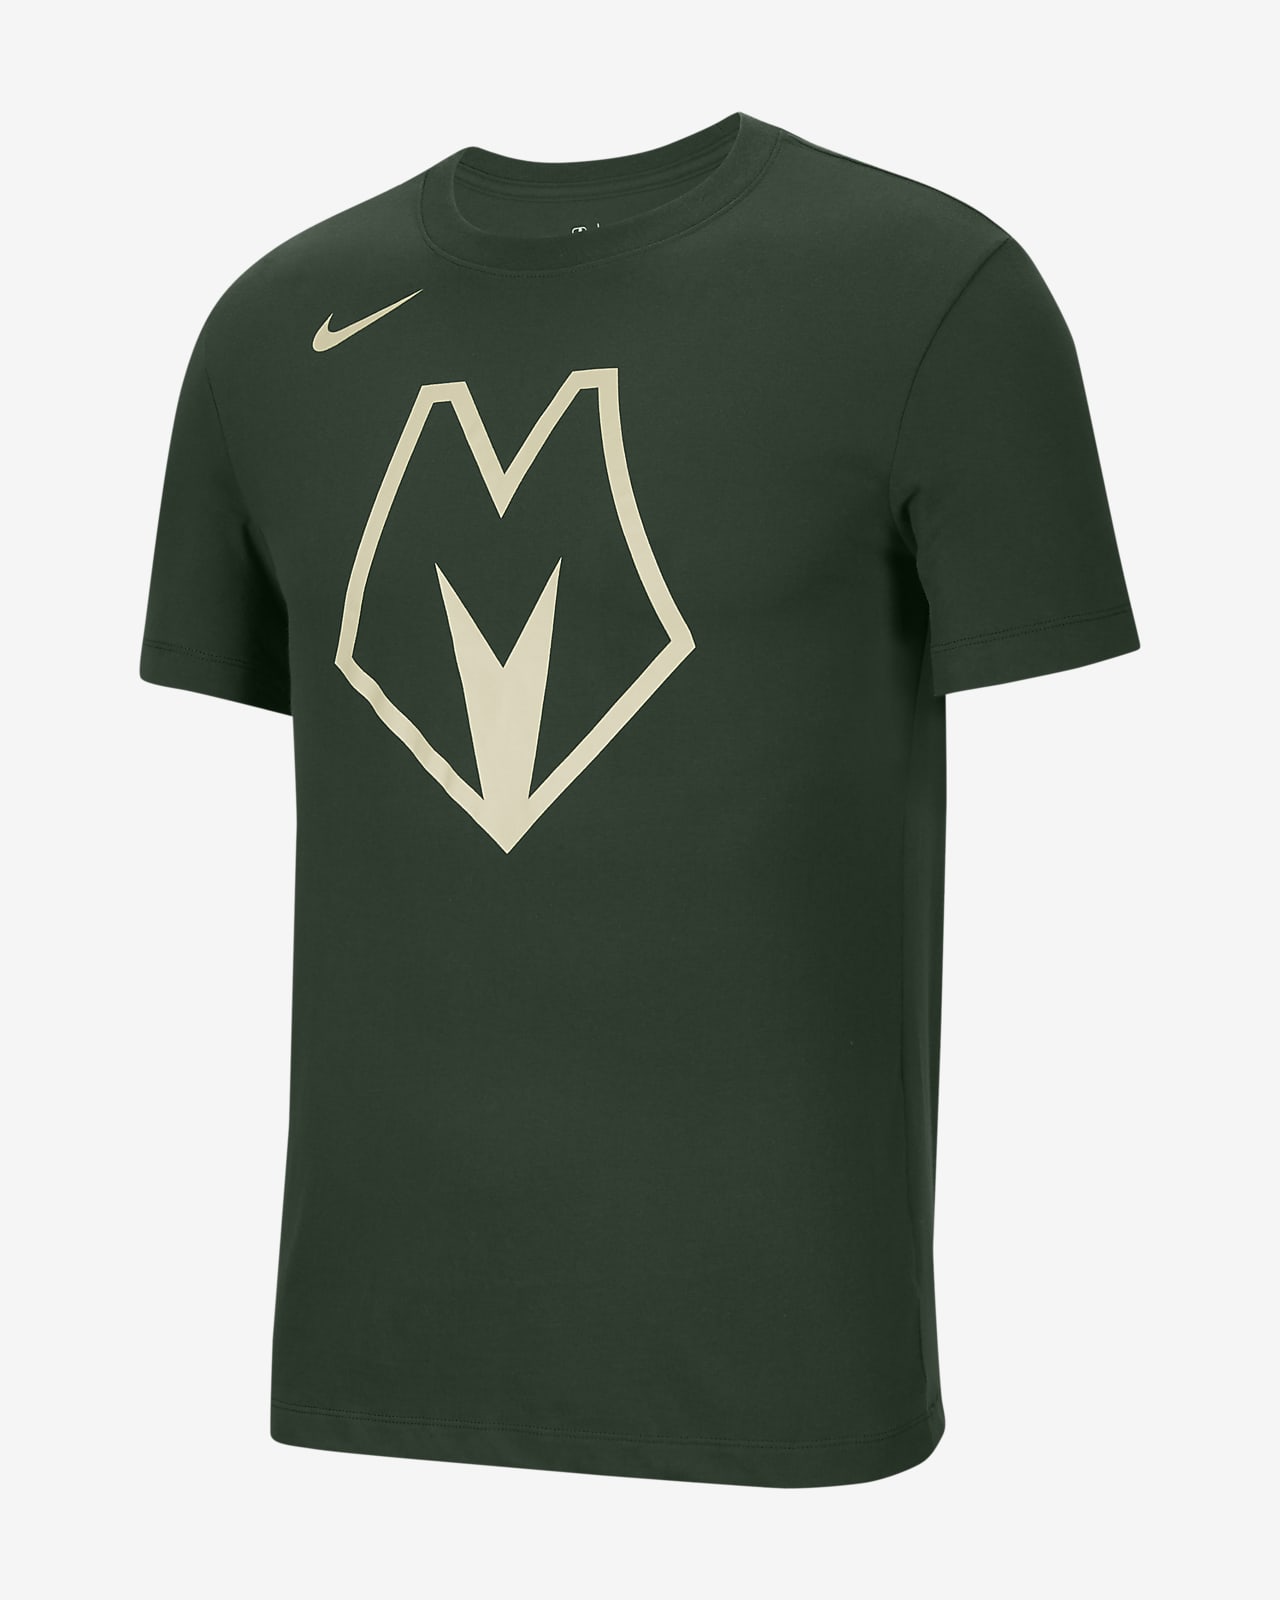 Bucks City Edition Logo Men S Nike Dri Fit Nba T Shirt Nike Id